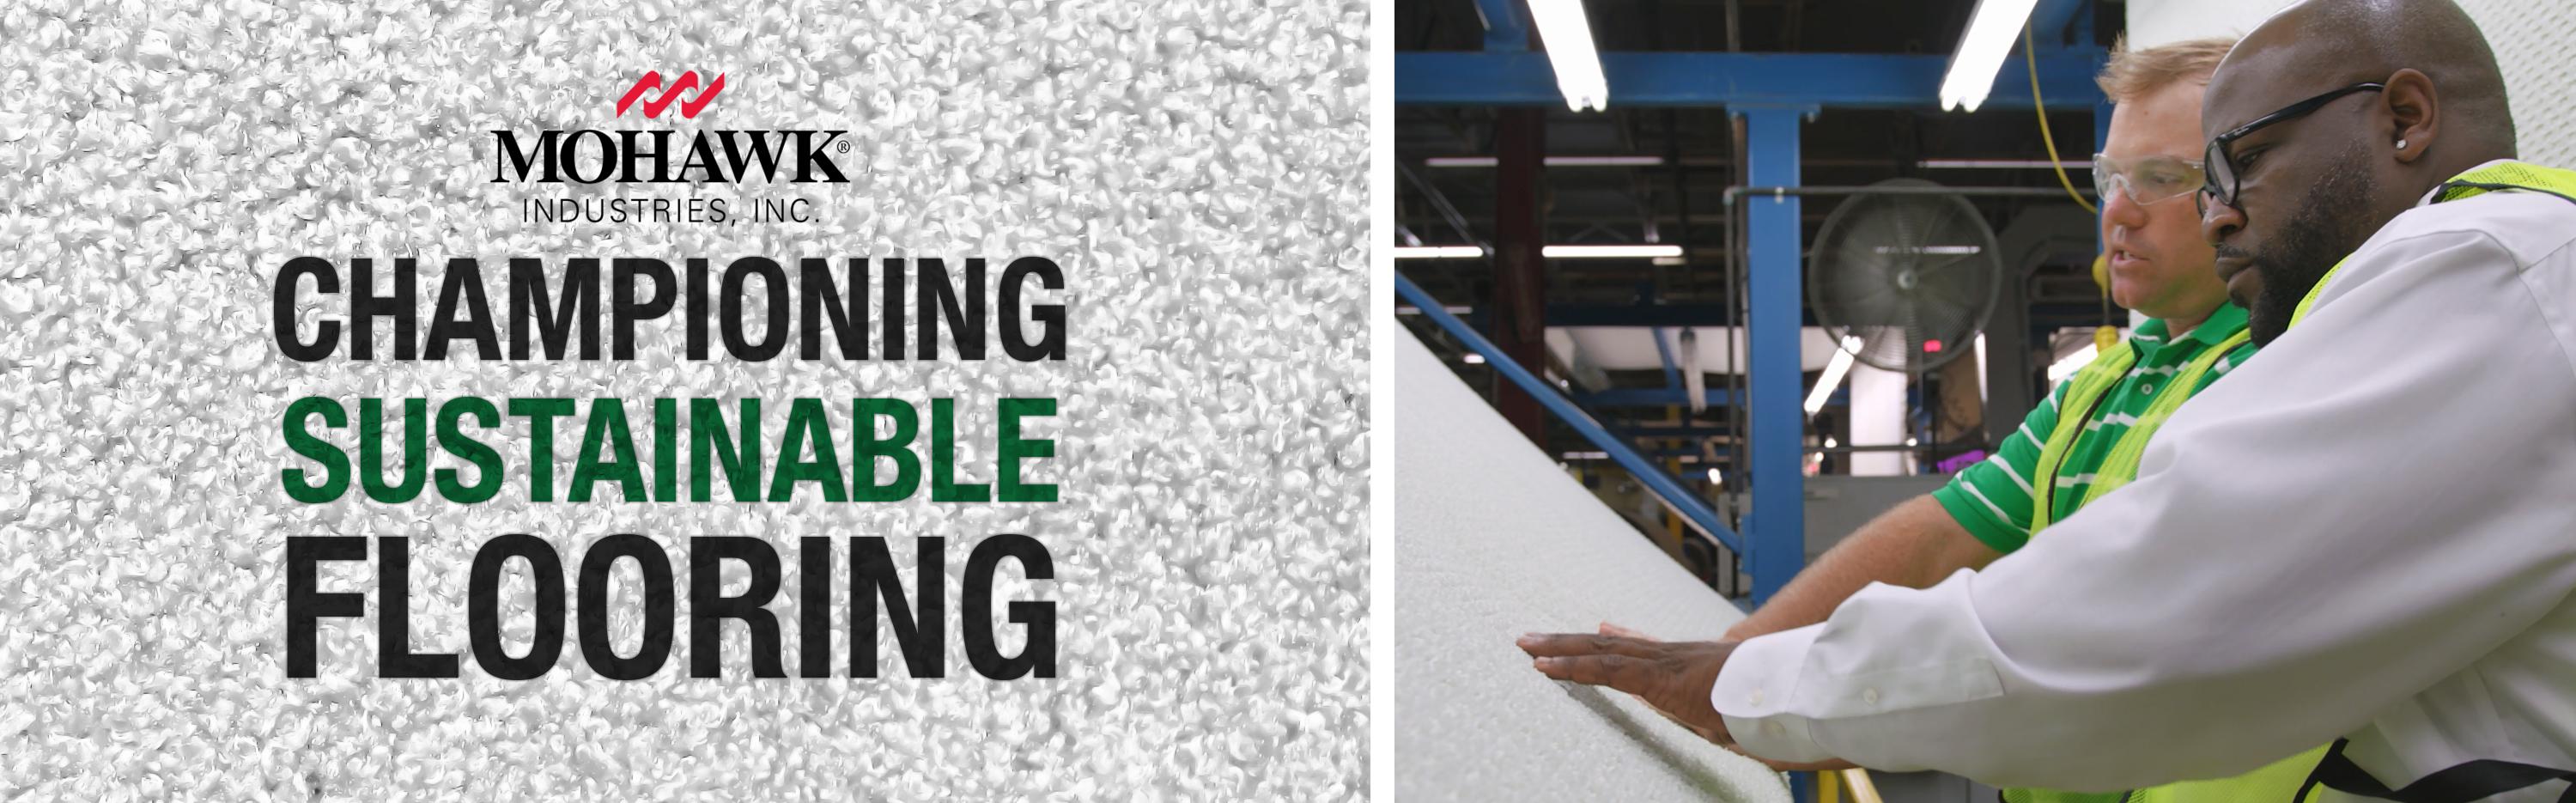 Mohawk Industries championing sustainable flooring 